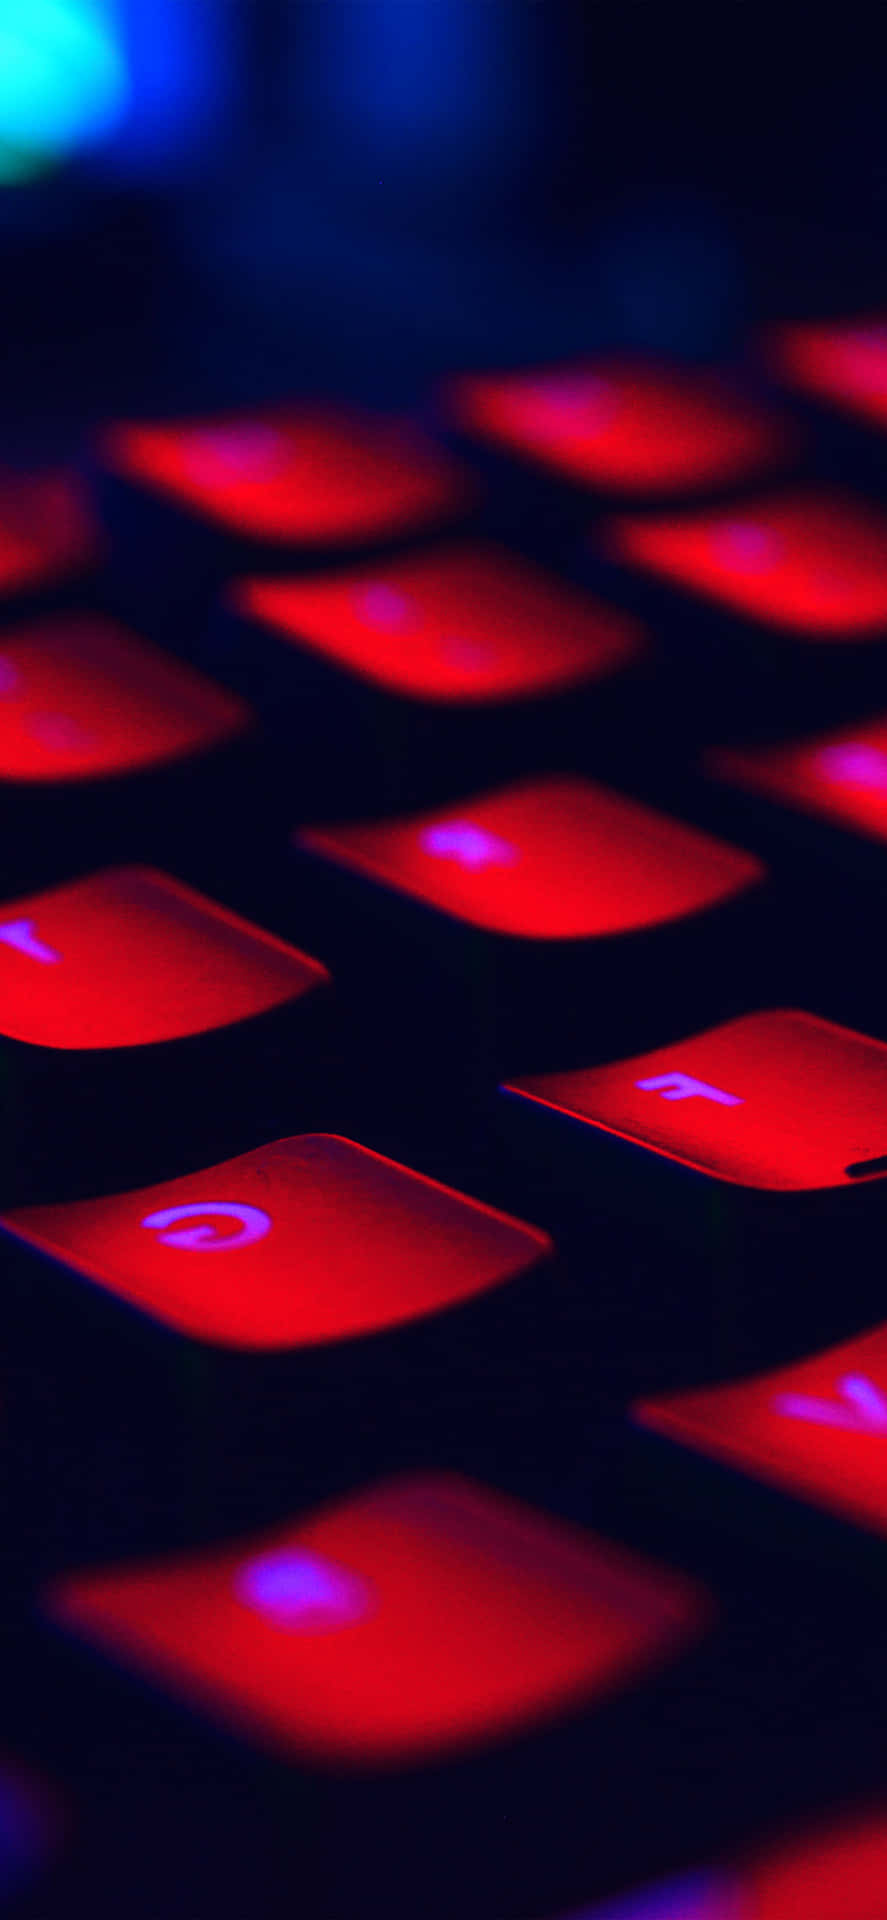 A Red Keyboard Wallpaper